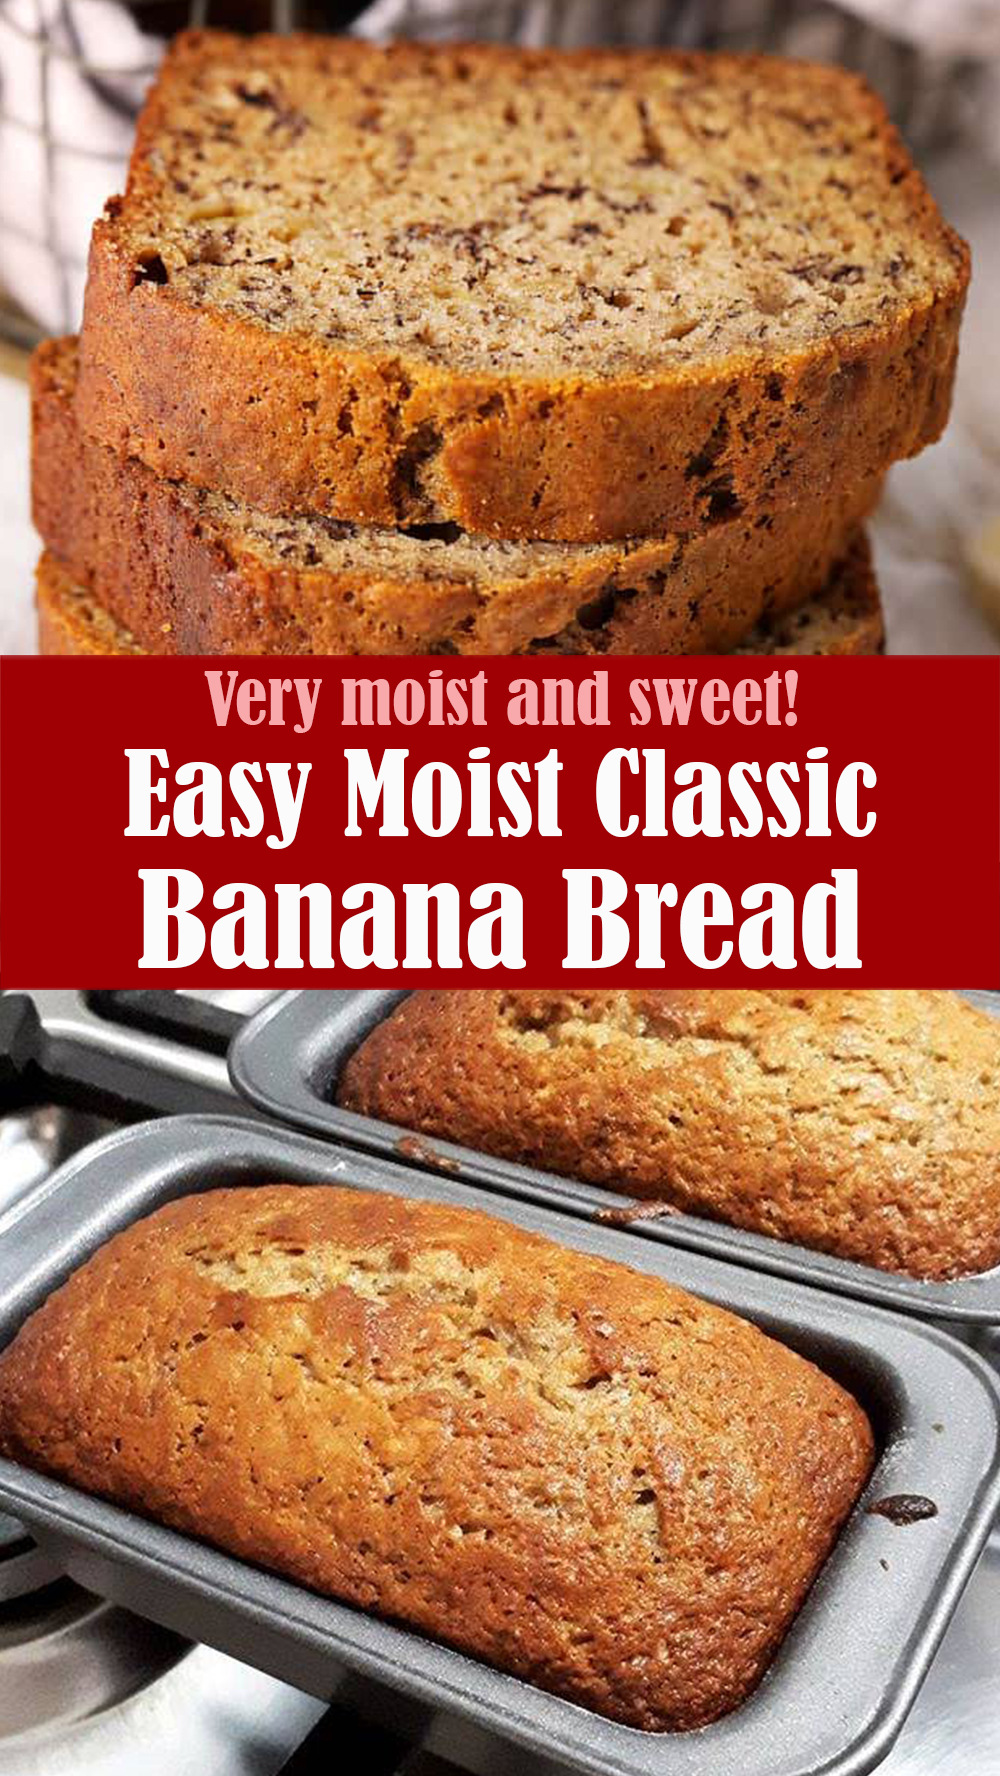 Easy Moist Classic Banana Bread